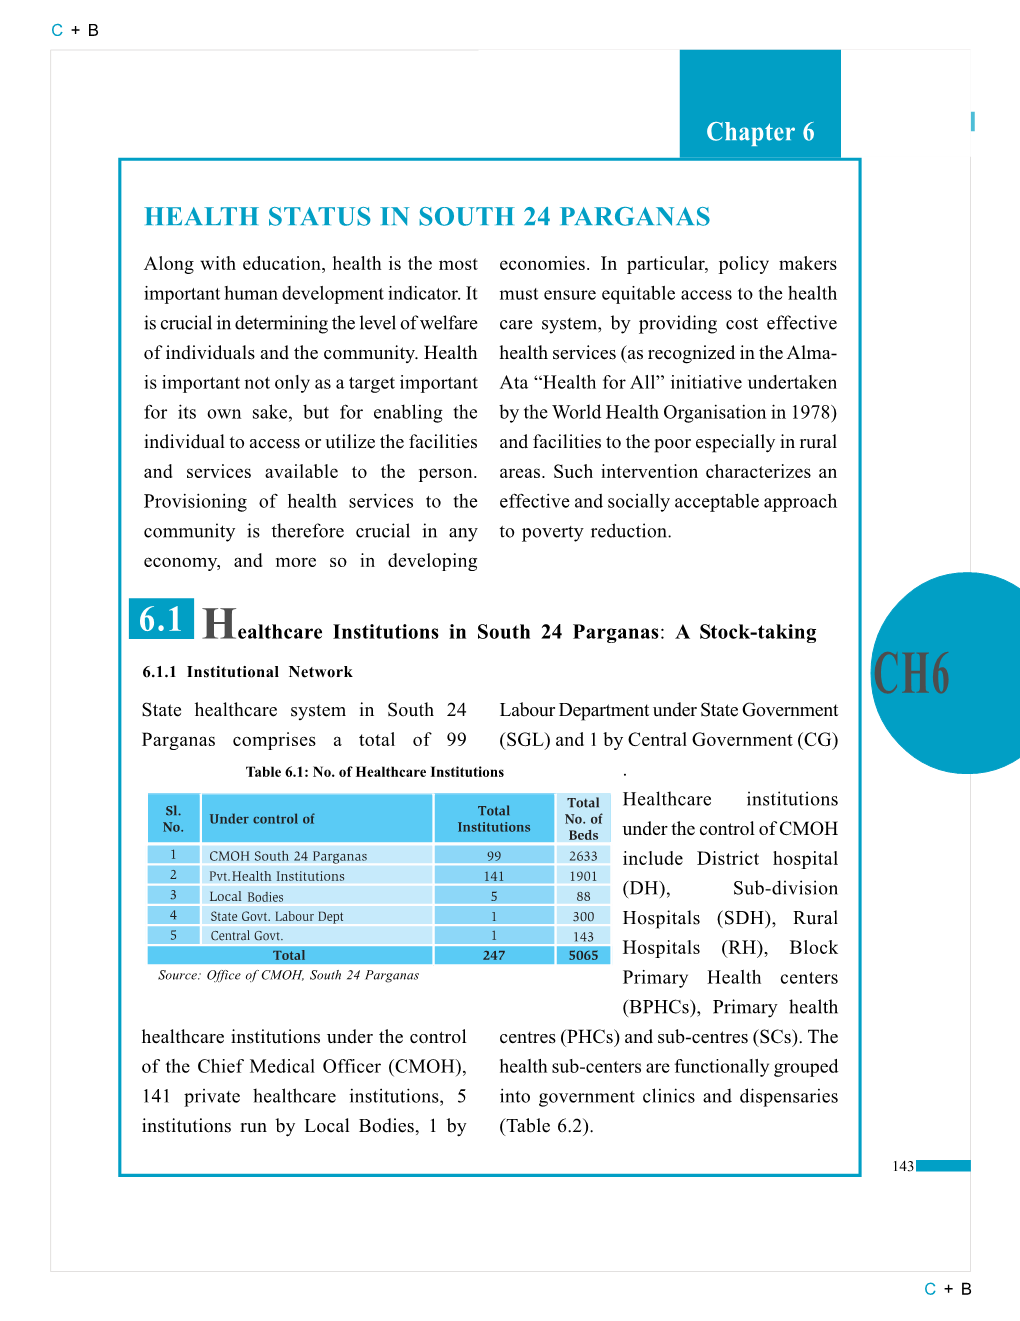 Health Status in South 24 Parganas